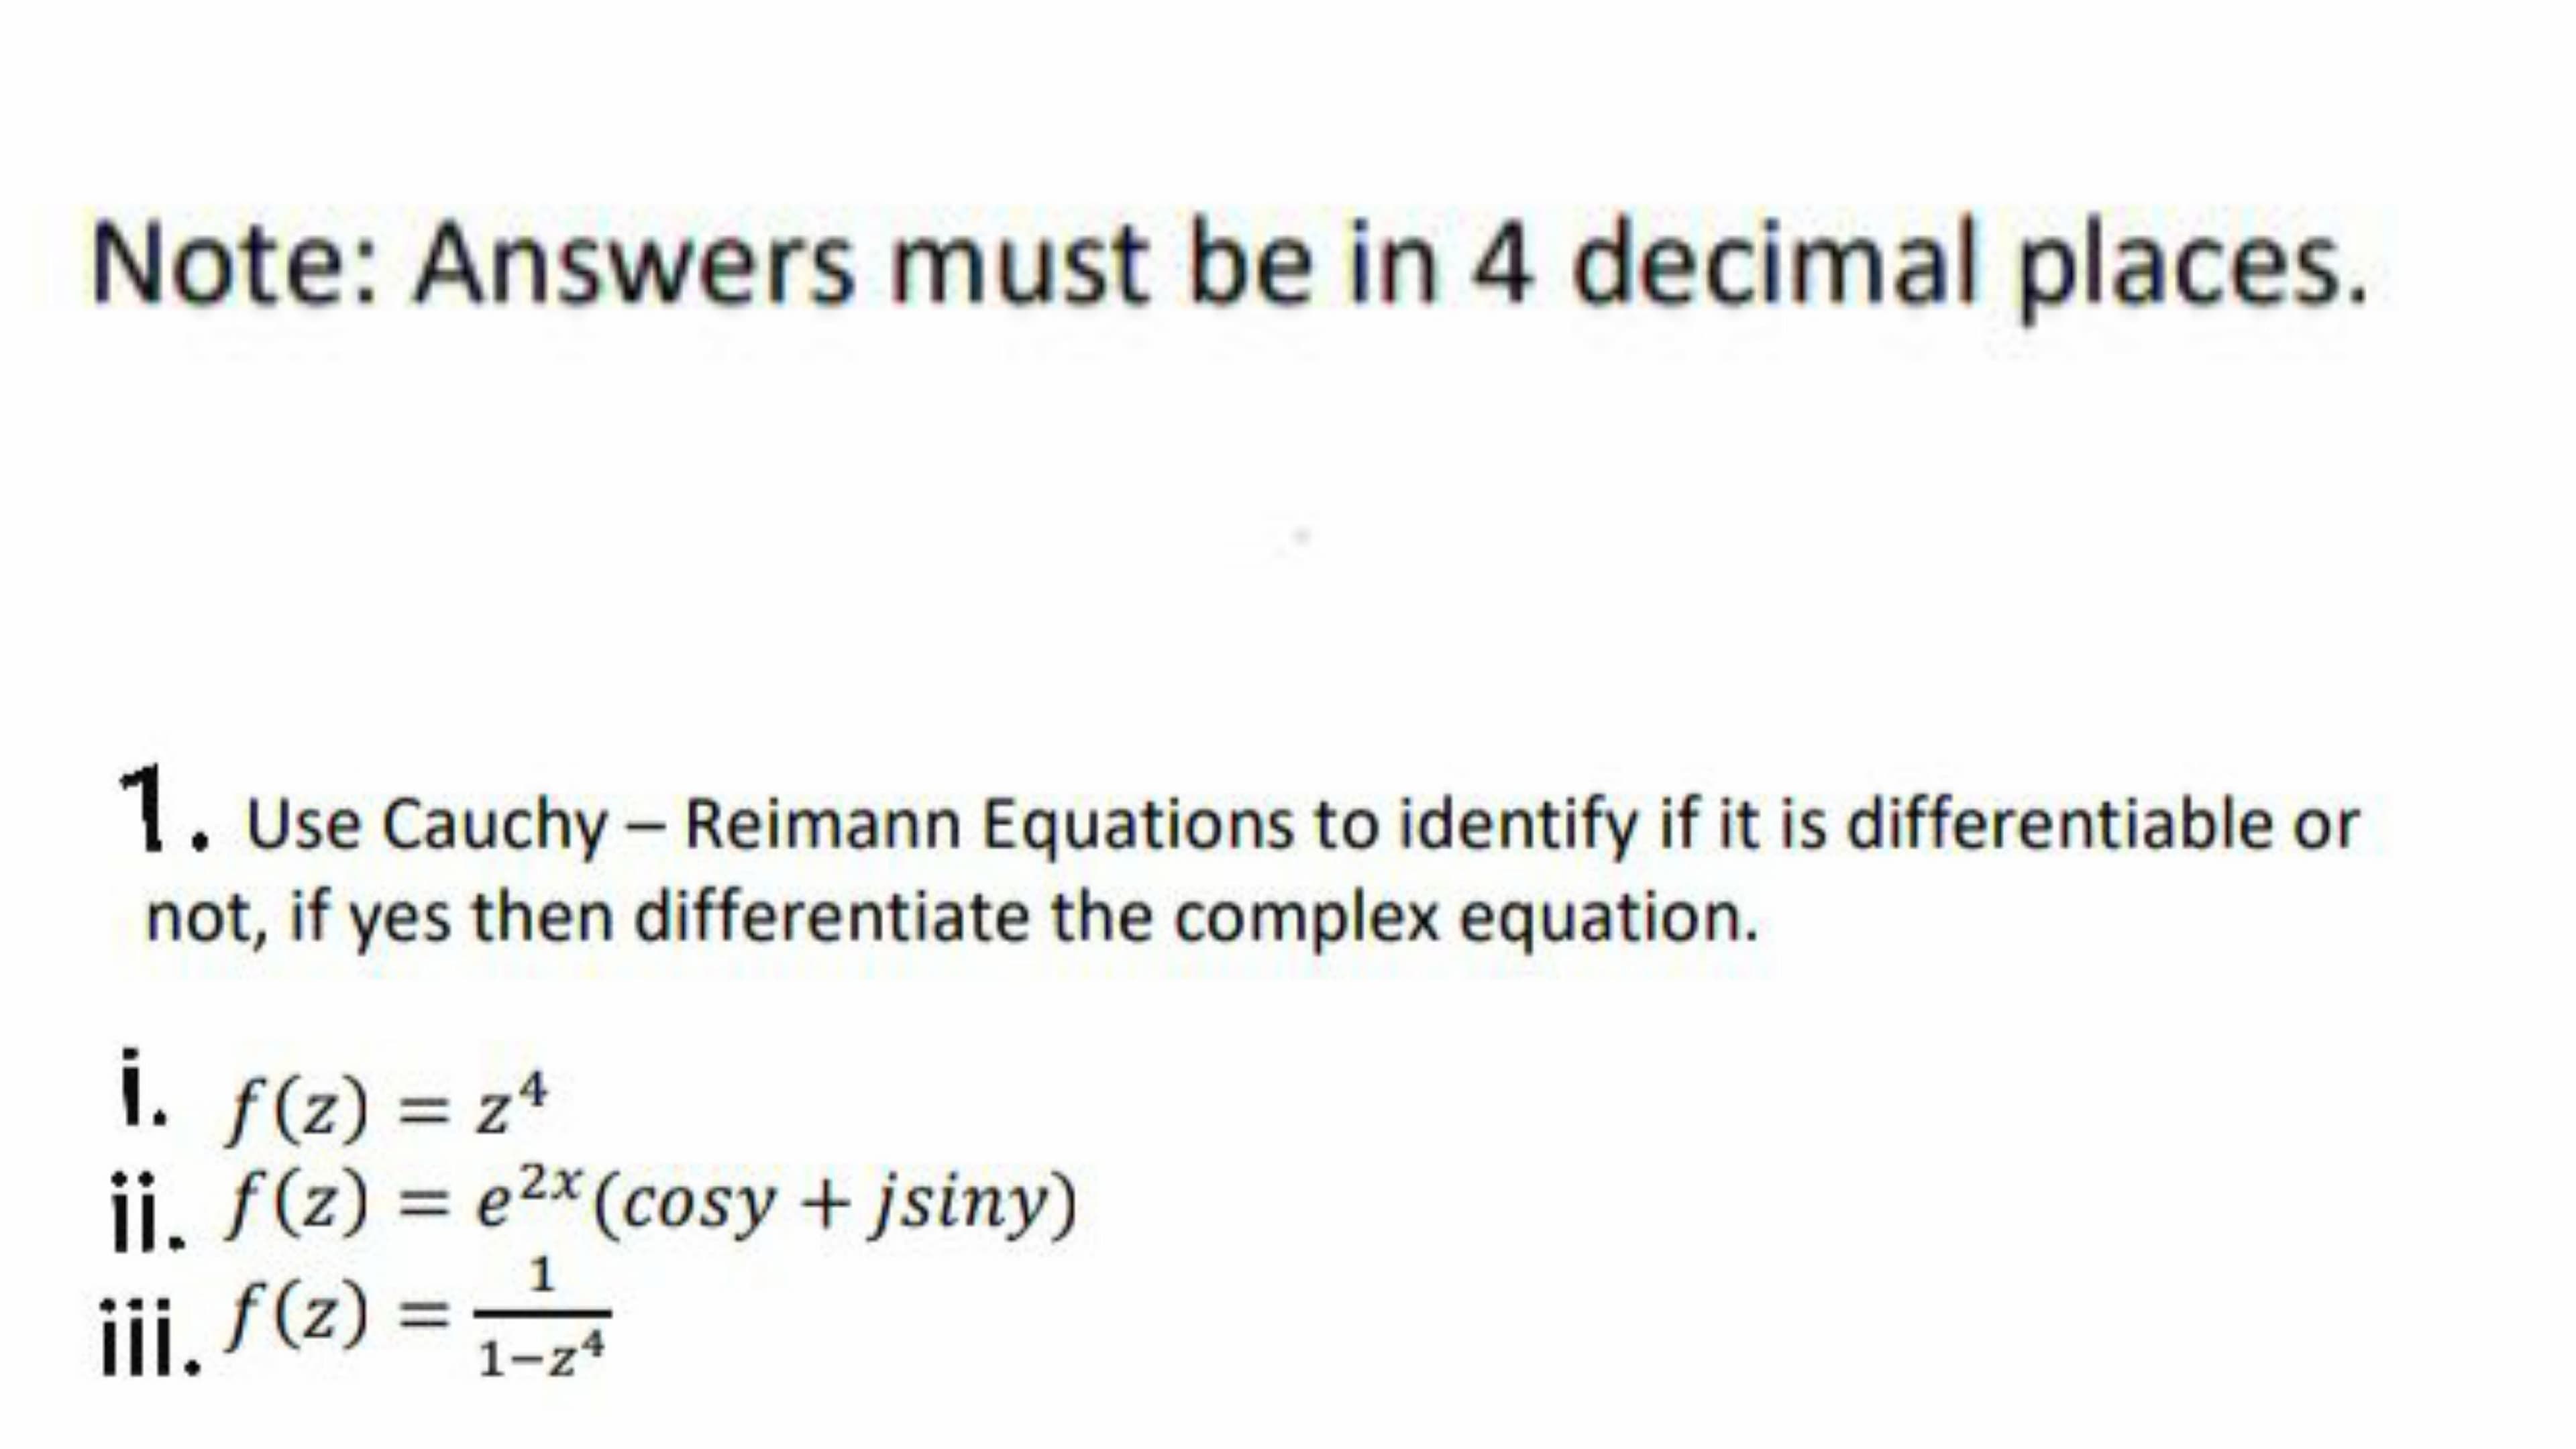 Cauchy-Reimann Equations
